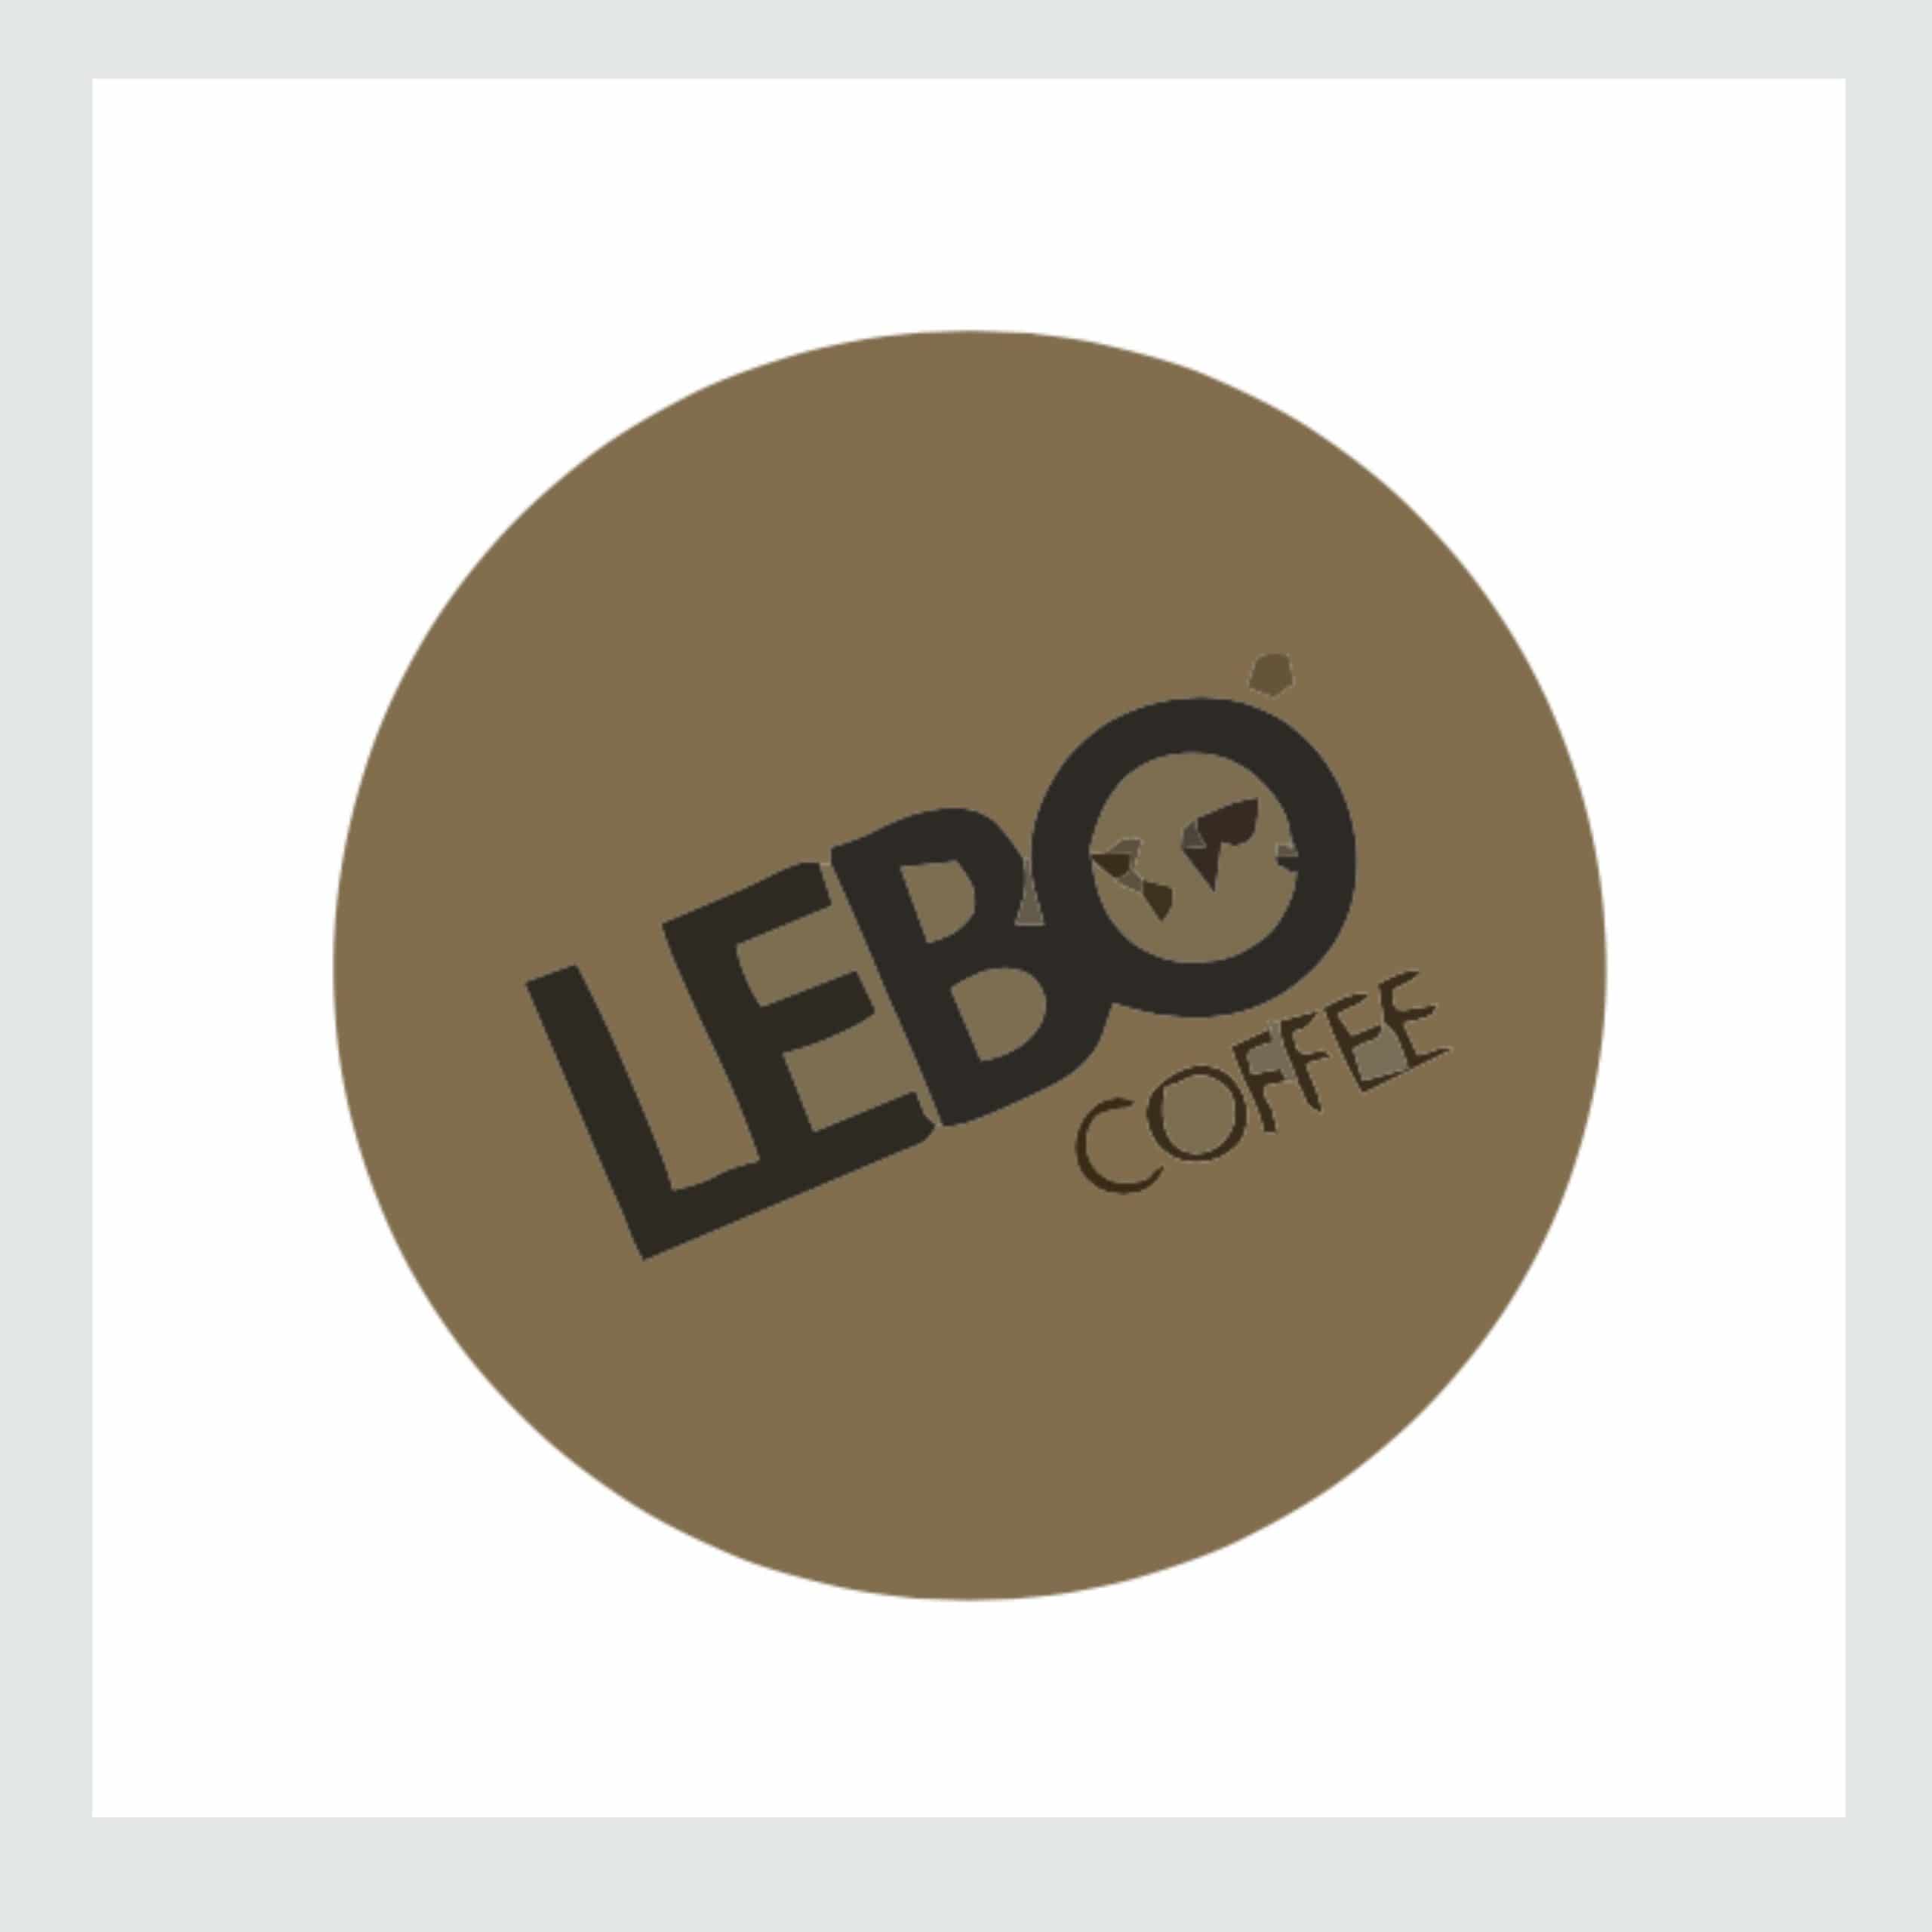 Lebo Coffee